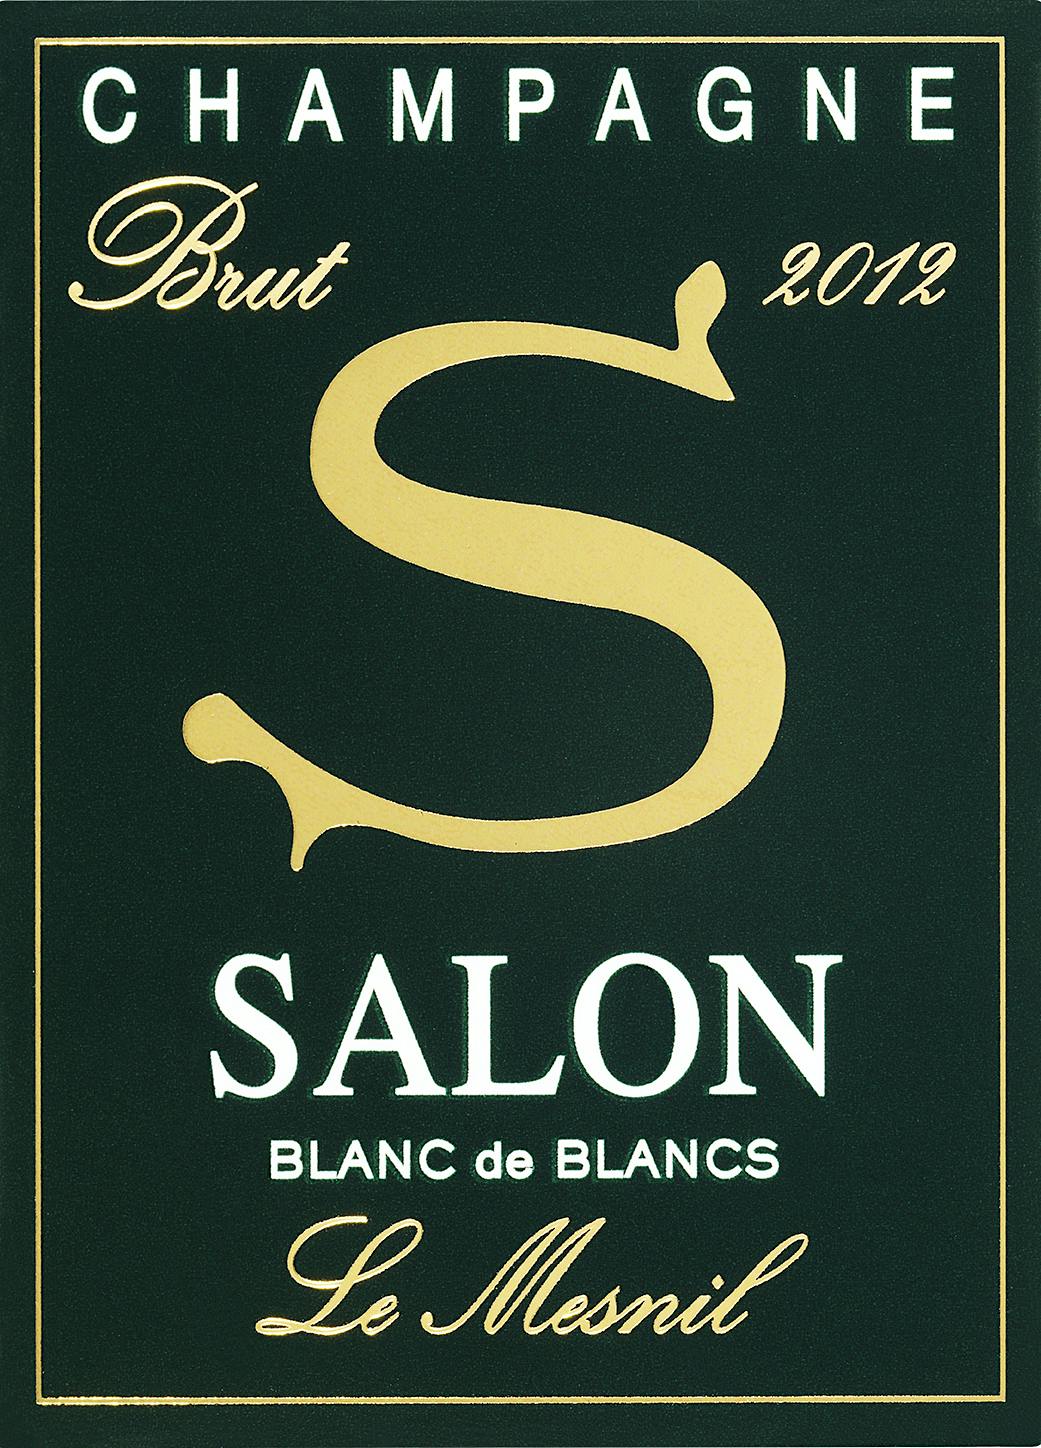 Label for Salon